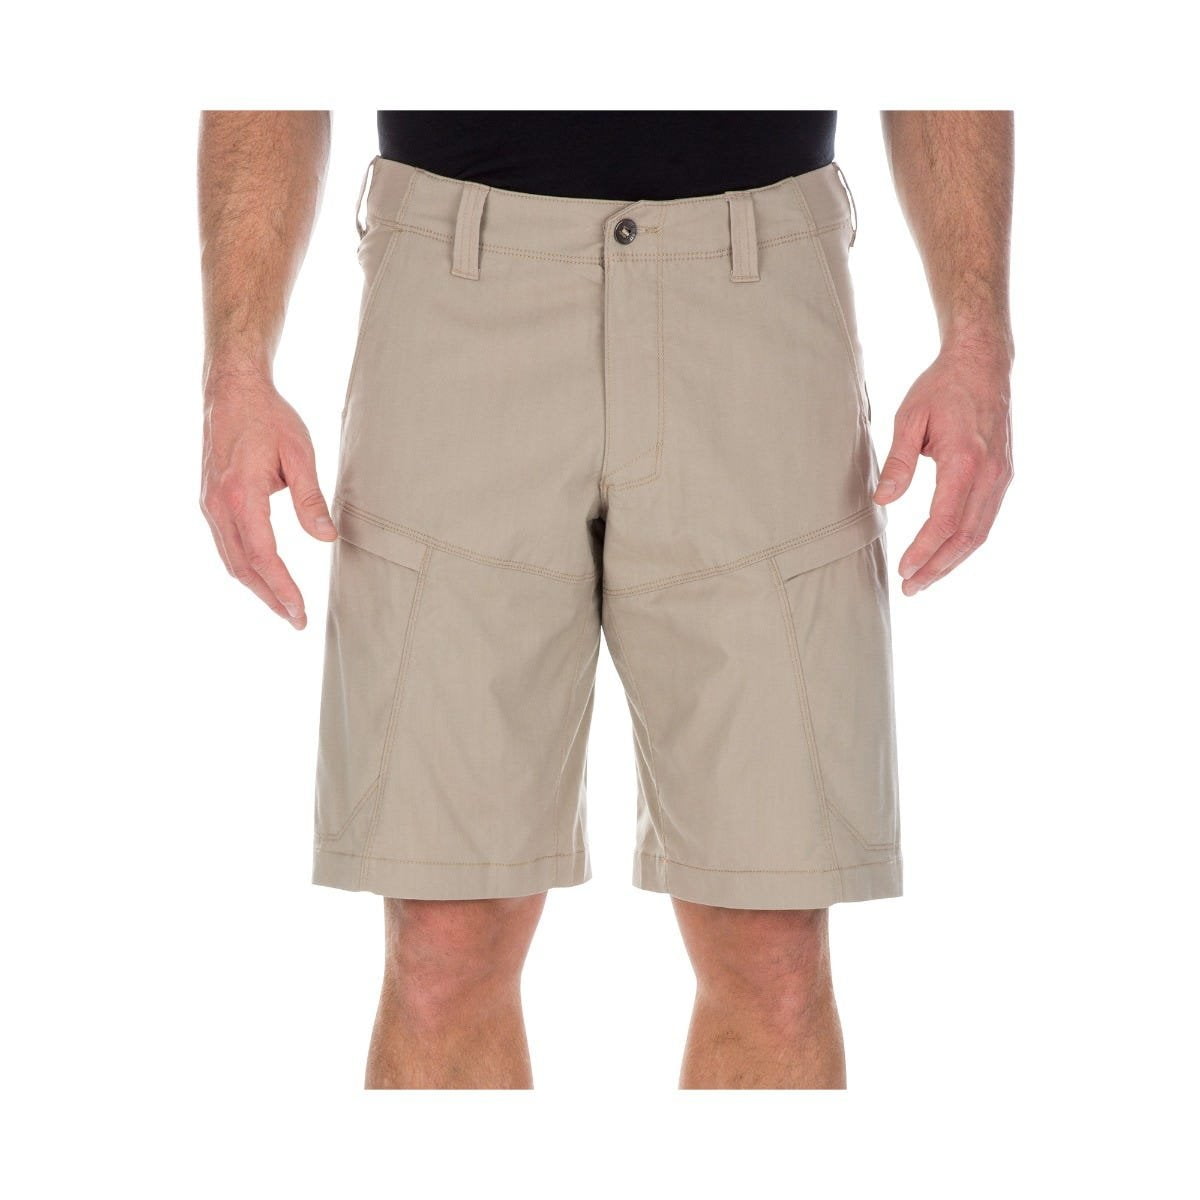 5.11 Tactical Men's Apex 11-Inch Shorts Lightweight Flex-Tac Fabric Style 73334 